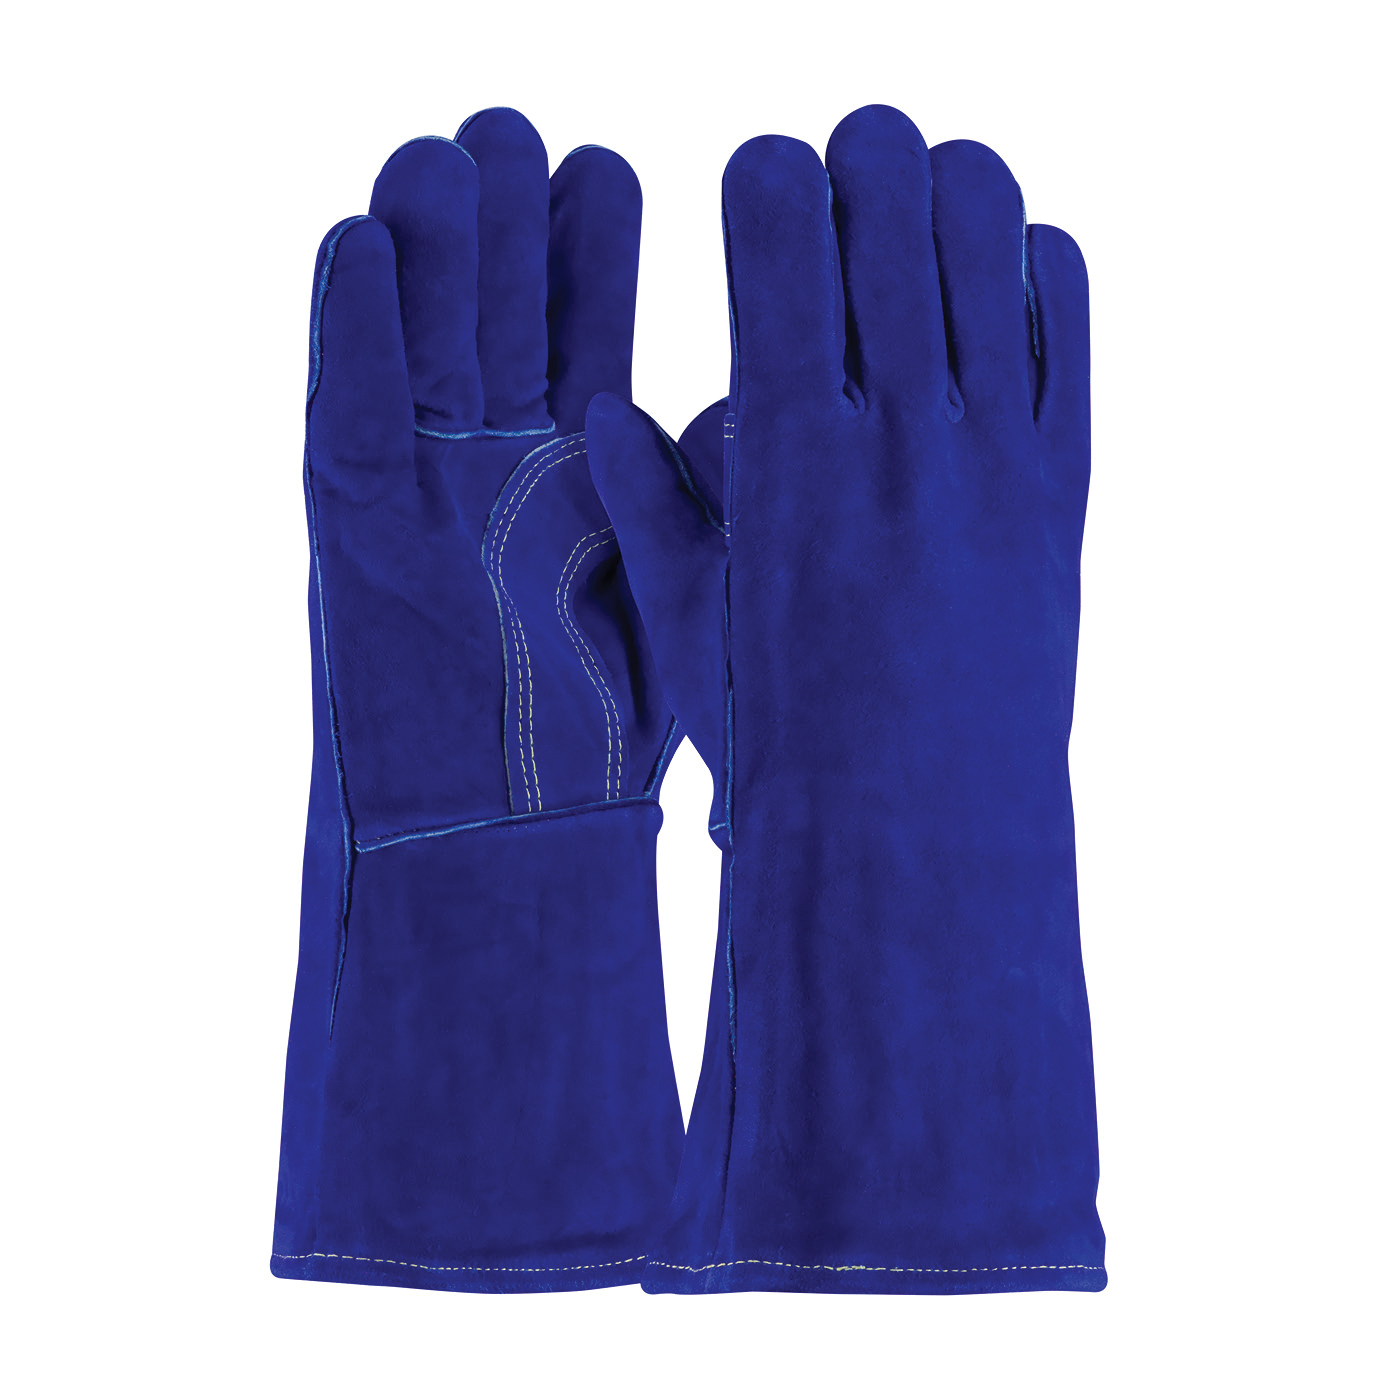 PIP® 73-7018 Men's Shoulder Grade Welding Gloves, L, Split Cowhide Leather, Blue, Cotton/Foam Lining, Full Leather Gauntlet Cuff, 13-1/2 in L, 1.2 mm THK Glove Material